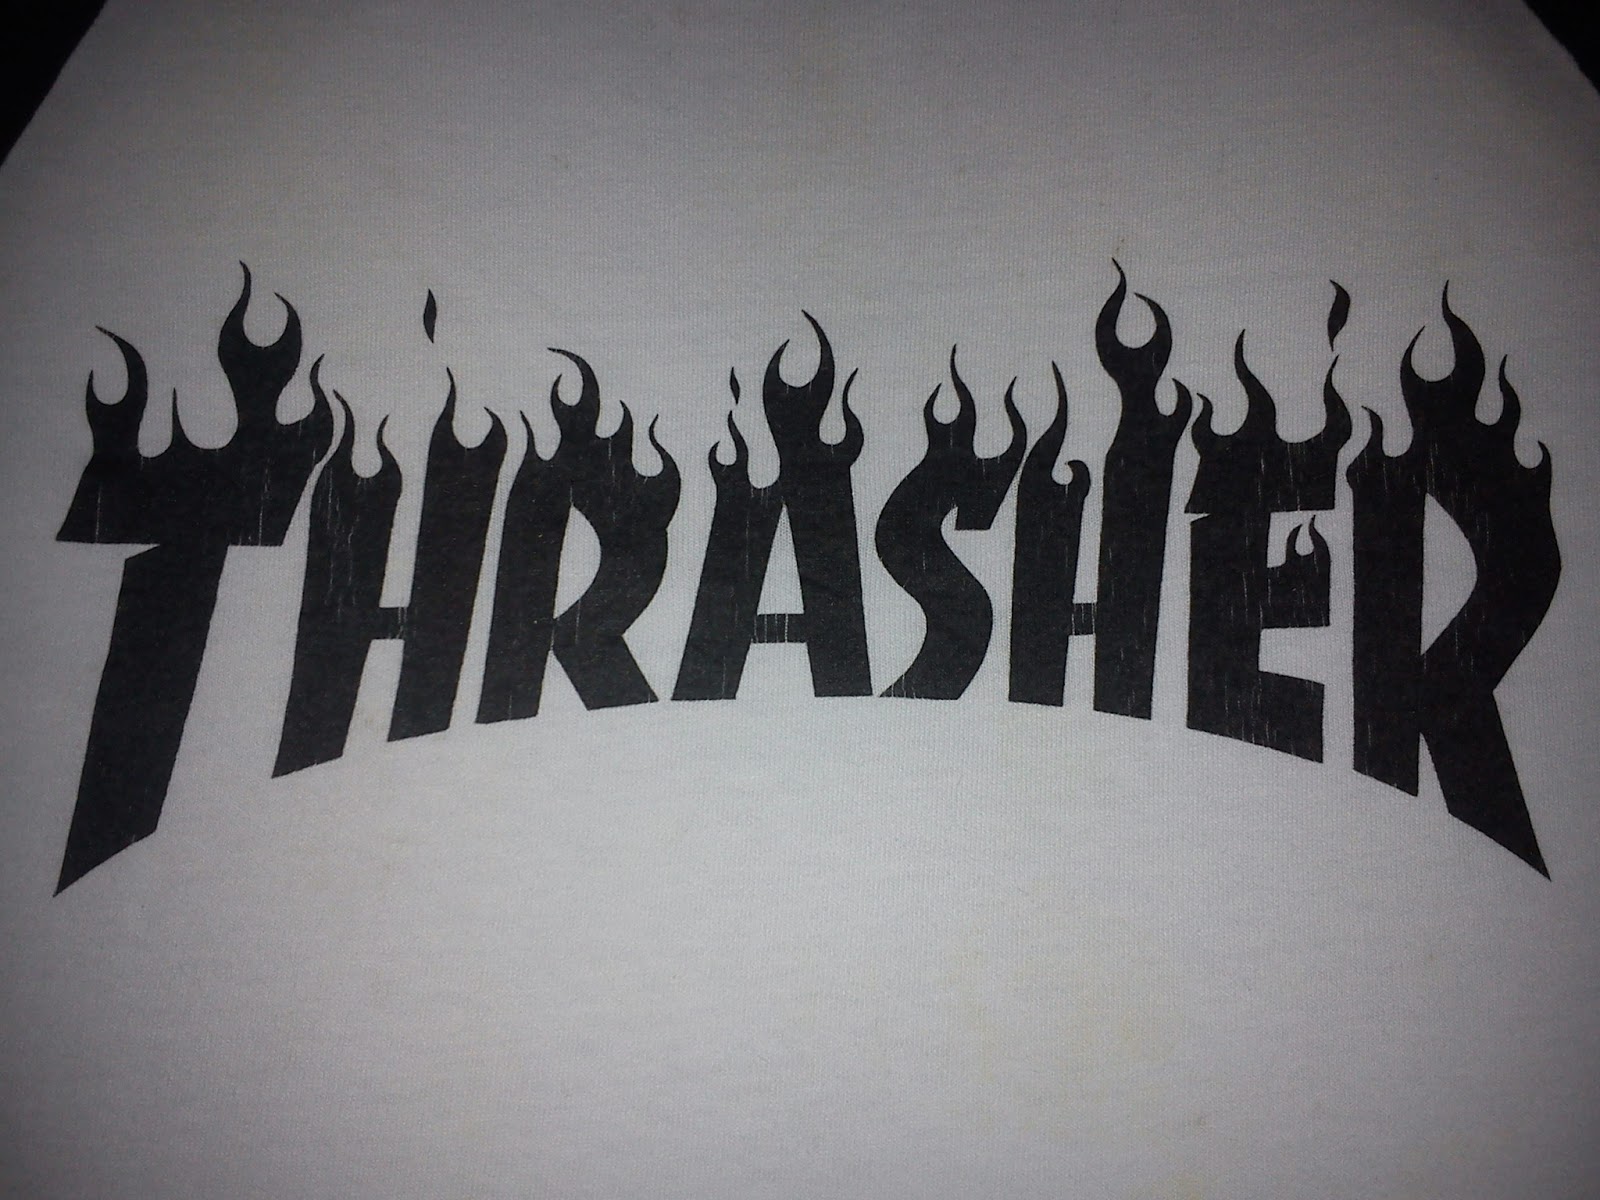 Thrasher Magazine Logo Color adio and job about logos 1600x1200